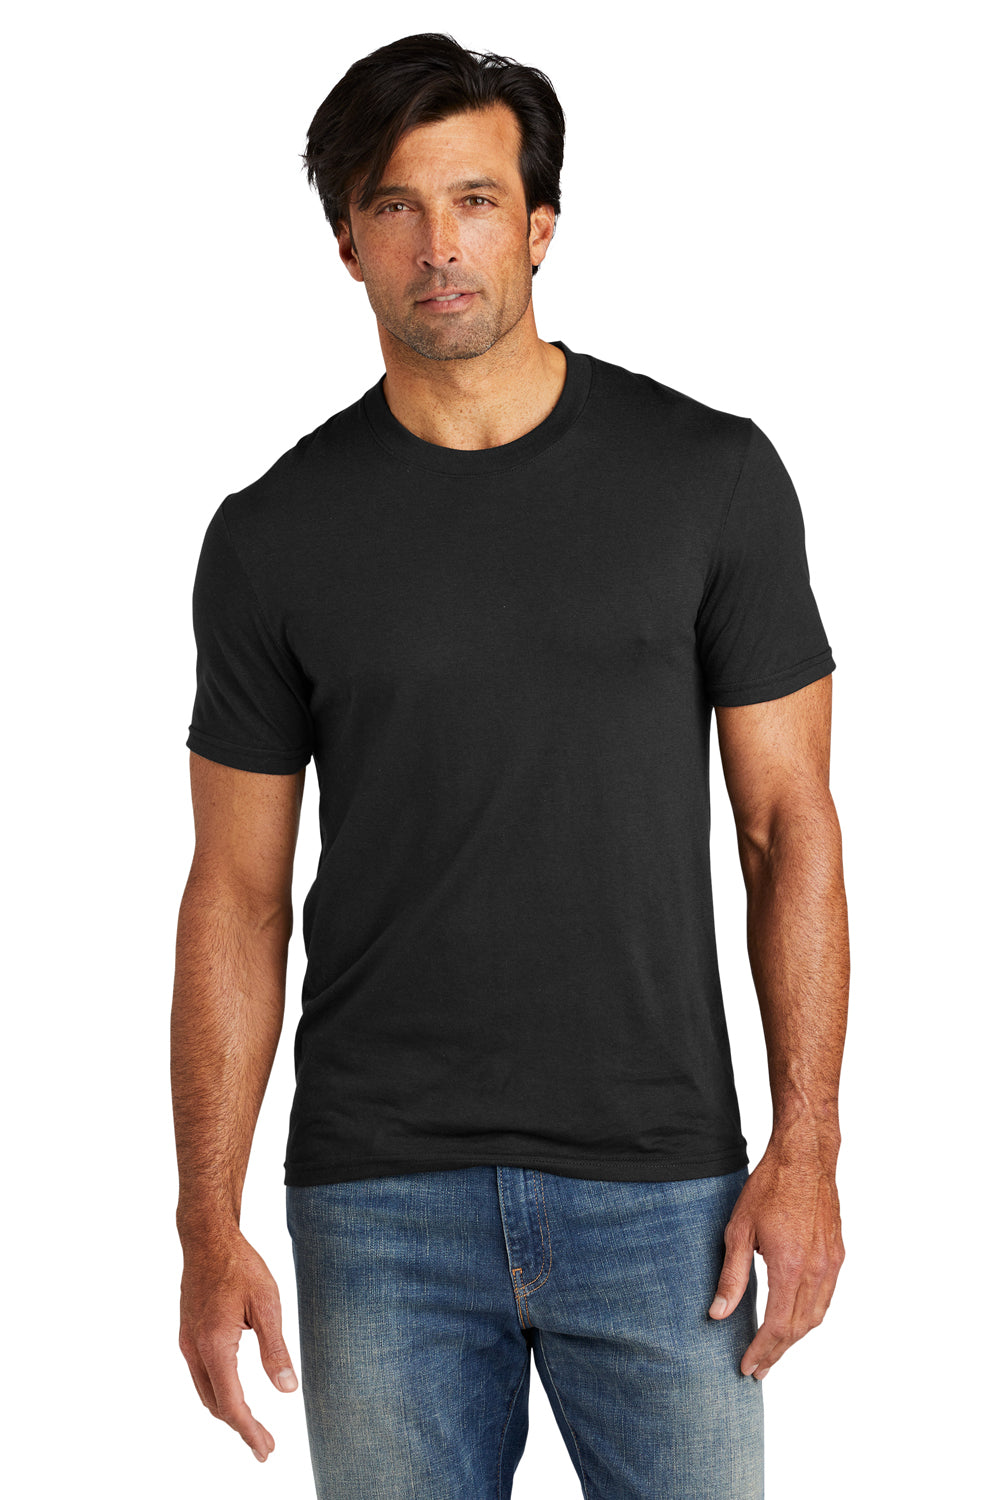 Volunteer Knitwear VL40 Short Sleeve Crewneck T-Shirt Black Front